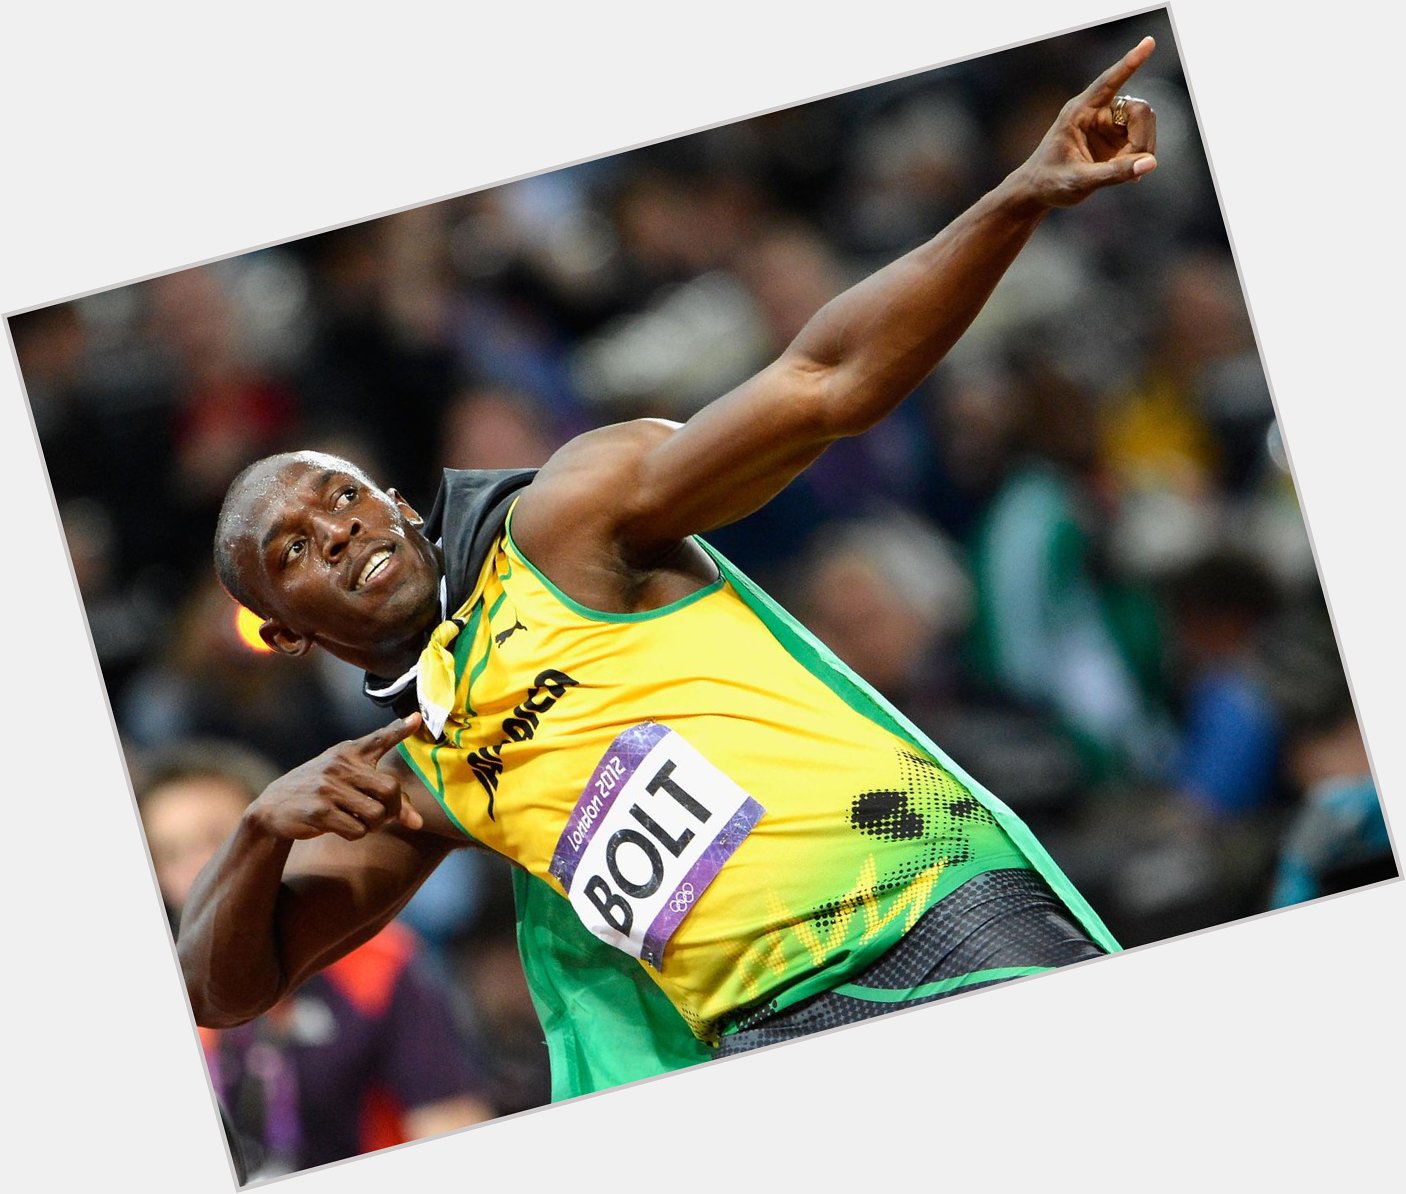 Happy birthday to the fastest man alive, Usain Bolt! 